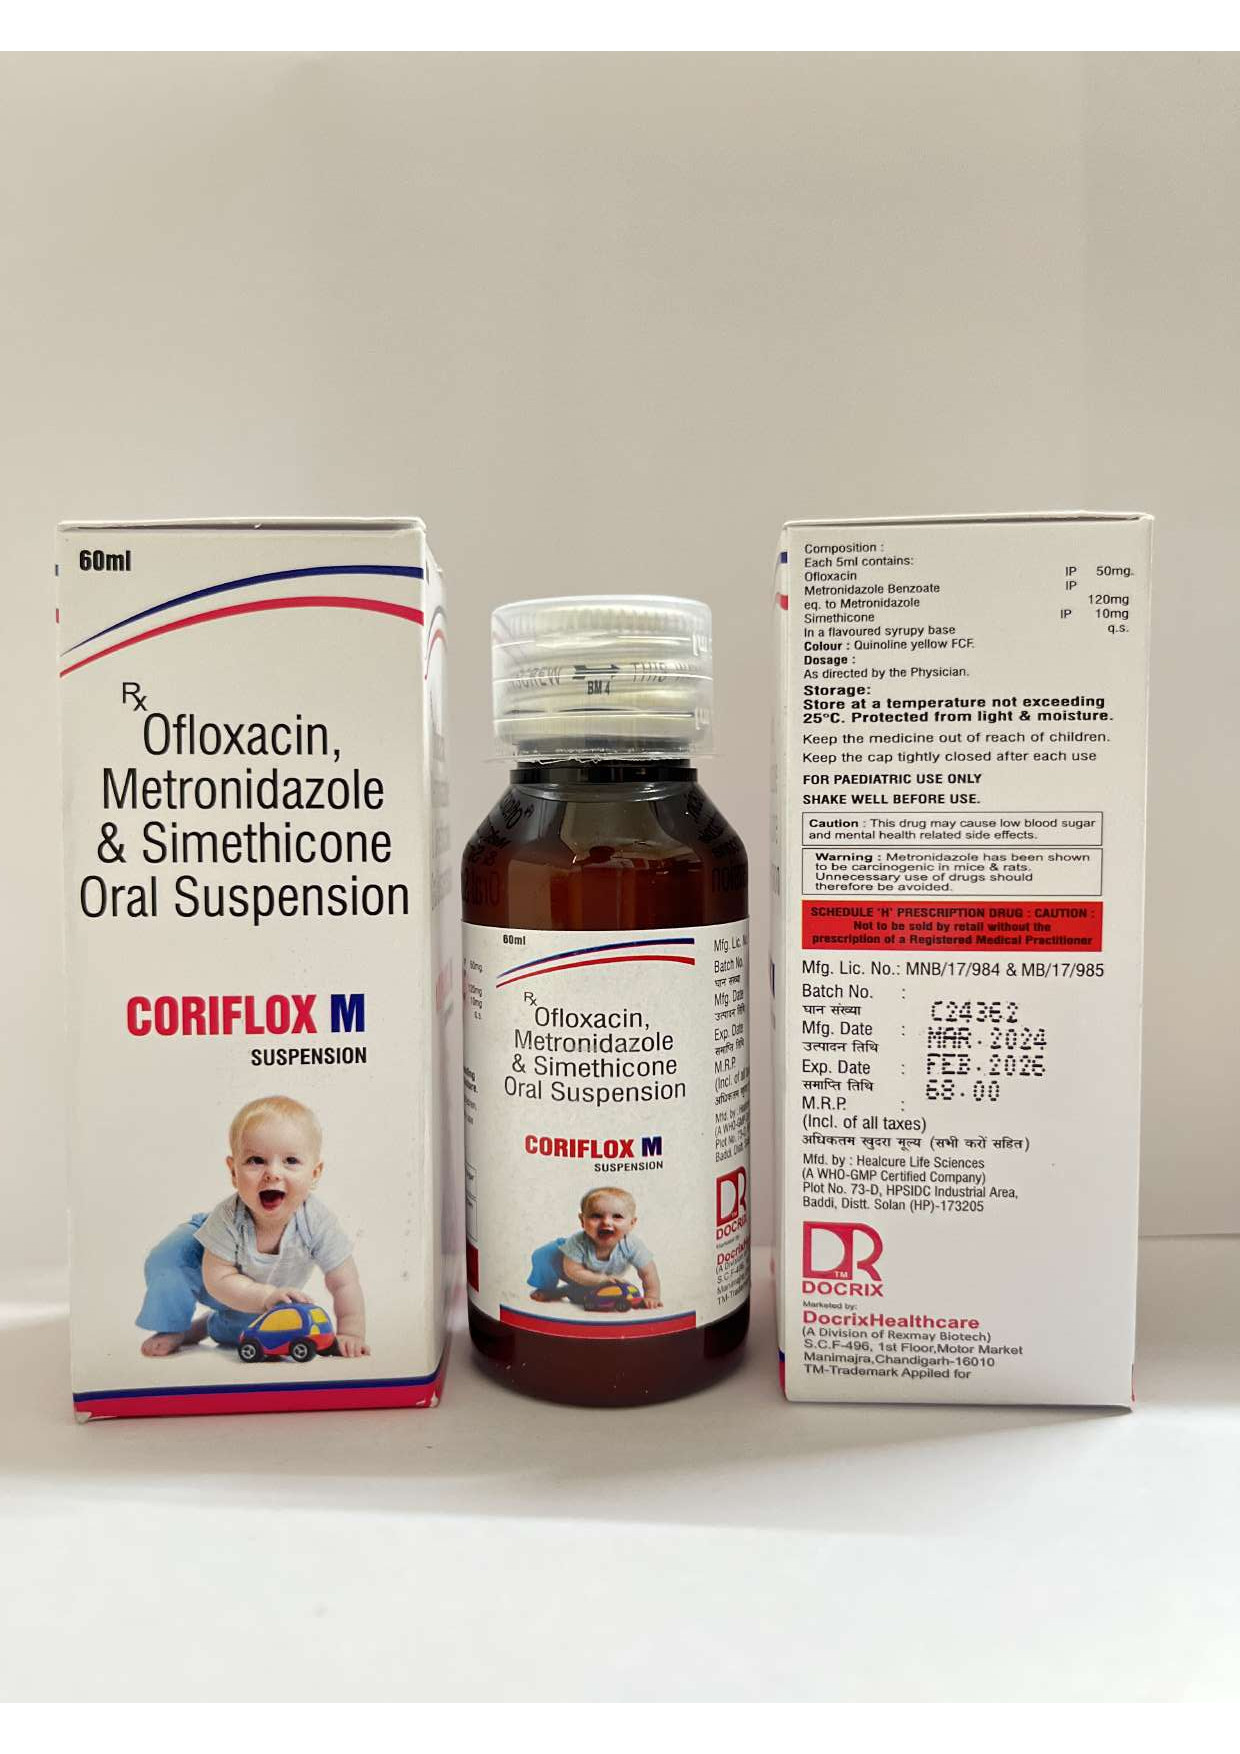 Product Name: Coriflox M, Compositions of Coriflox M are Ofloxacin Metronidazole & Simethicone Oral Suspension - Docrix Healthcare